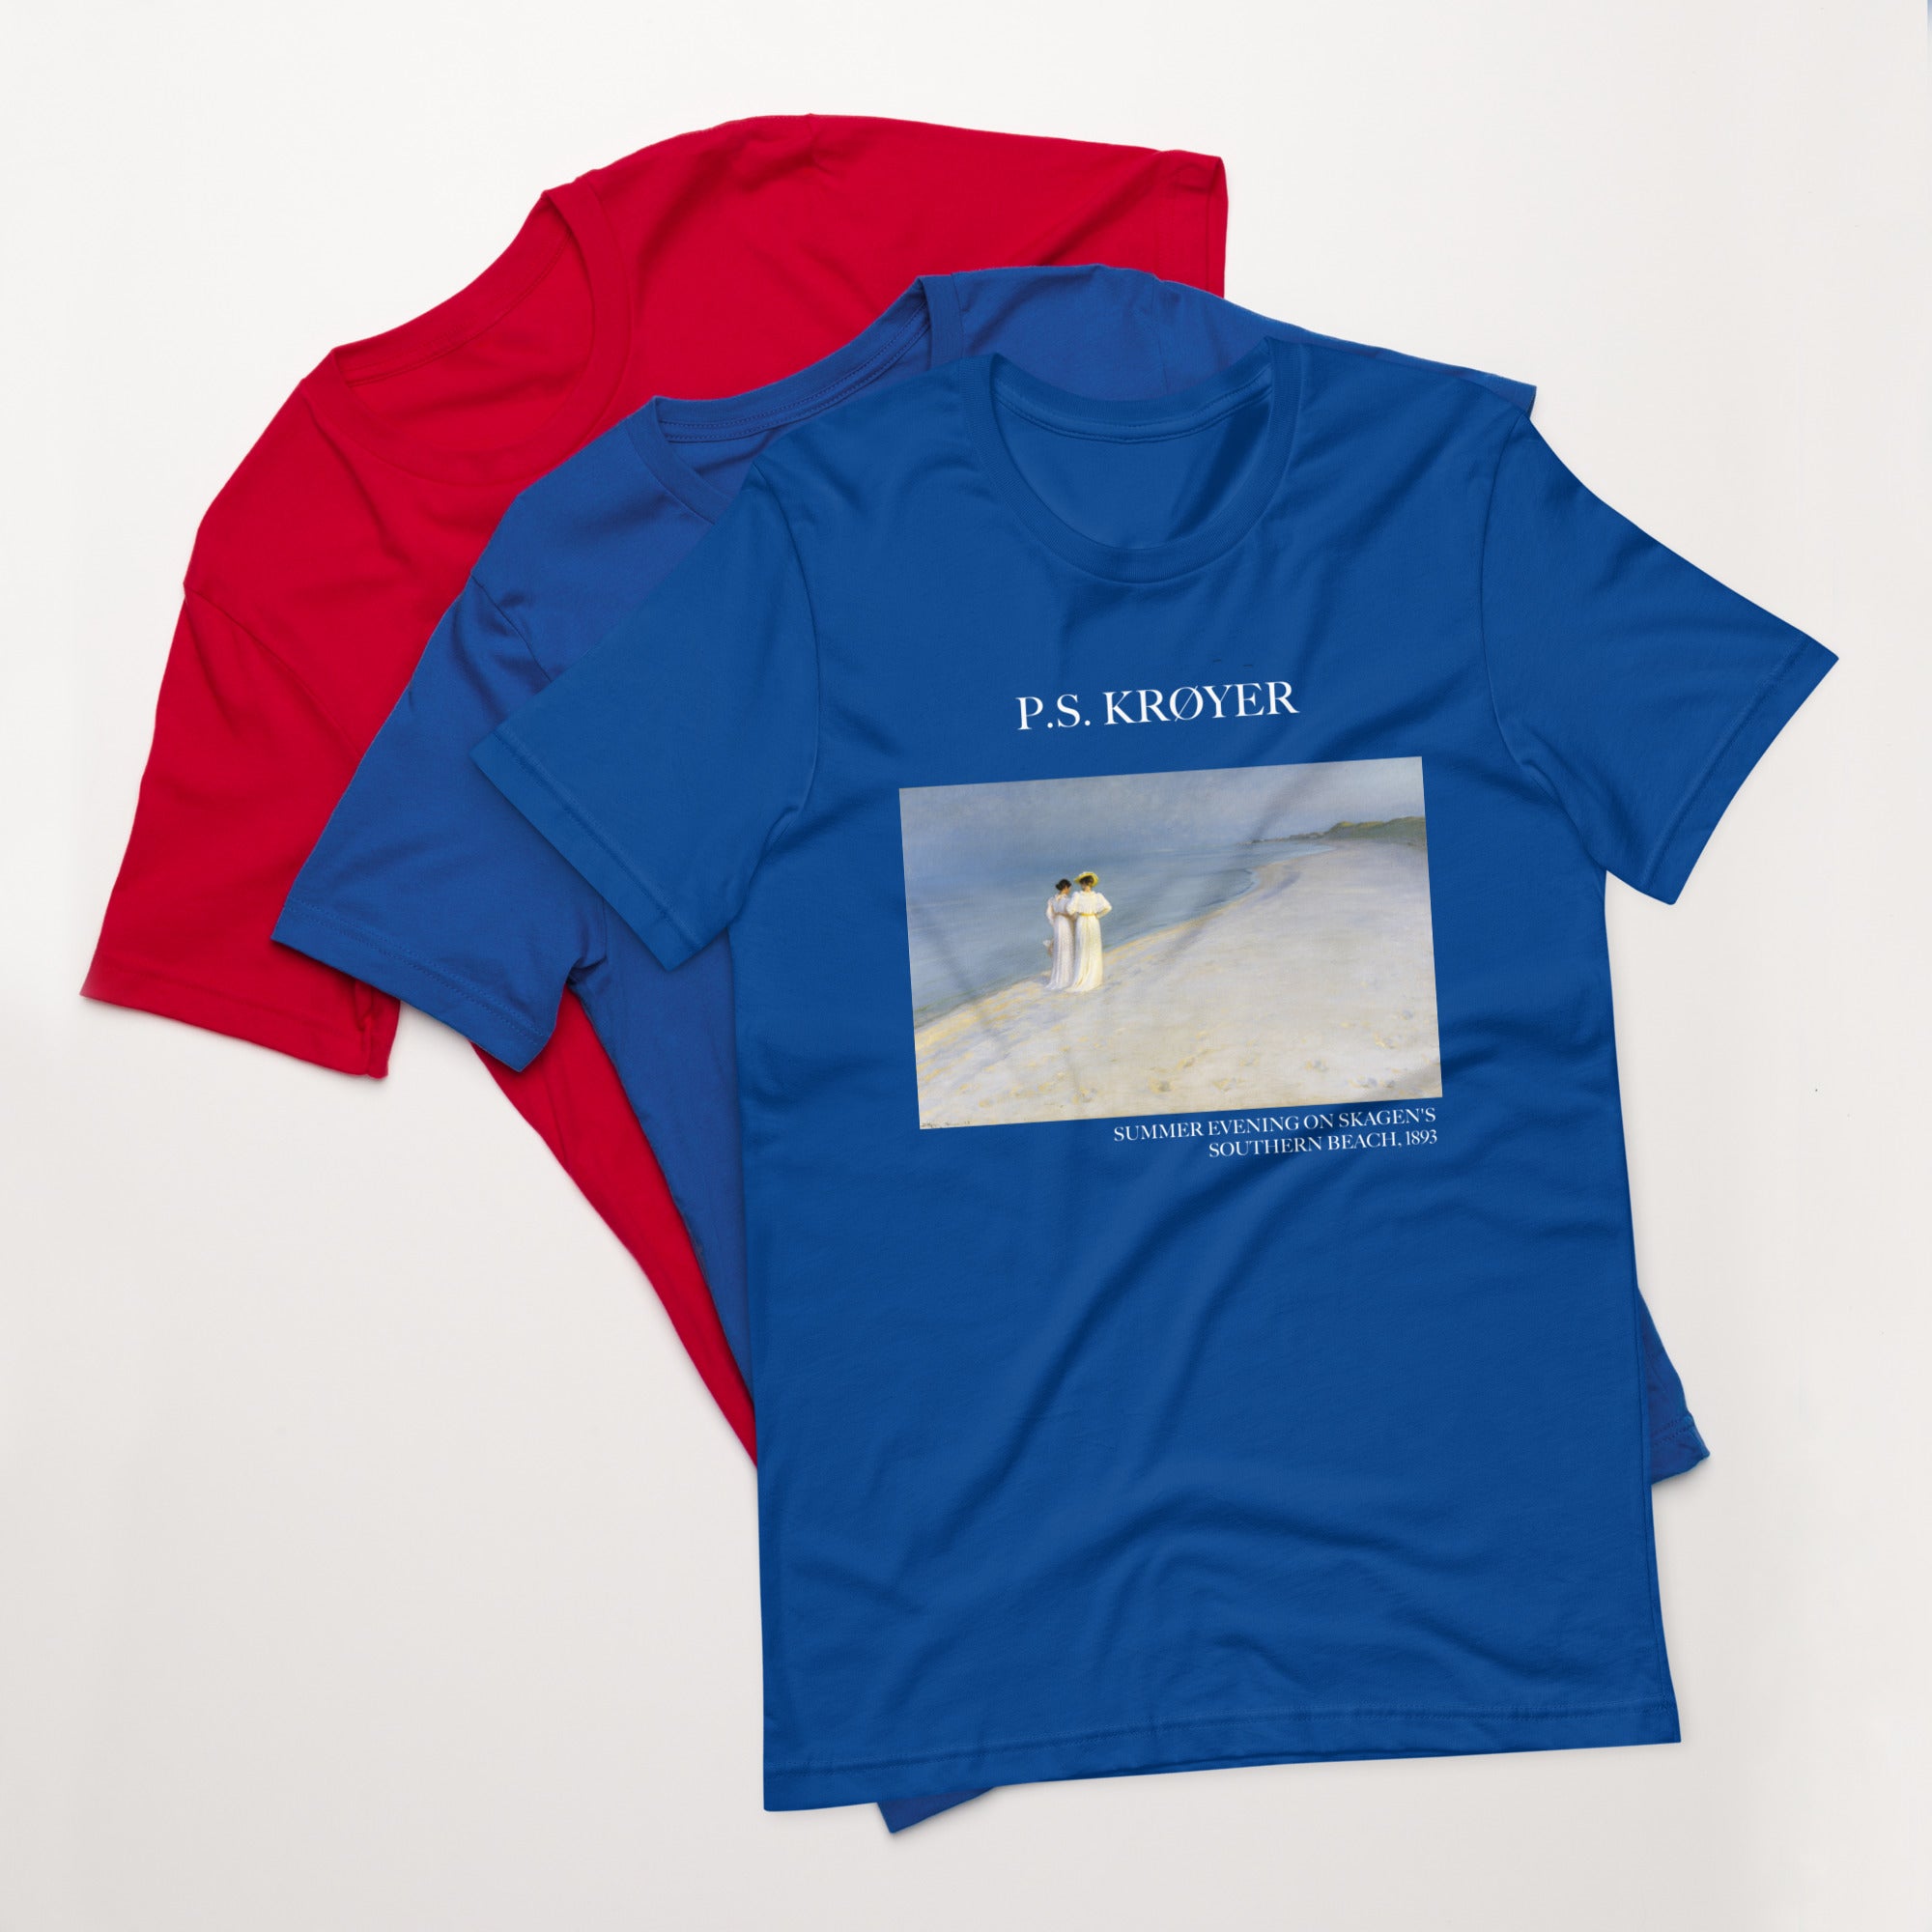 P.S. Krøyer 'Summer Evening on Skagen's Southern Beach' Famous Painting T-Shirt | Unisex Classic Art Tee